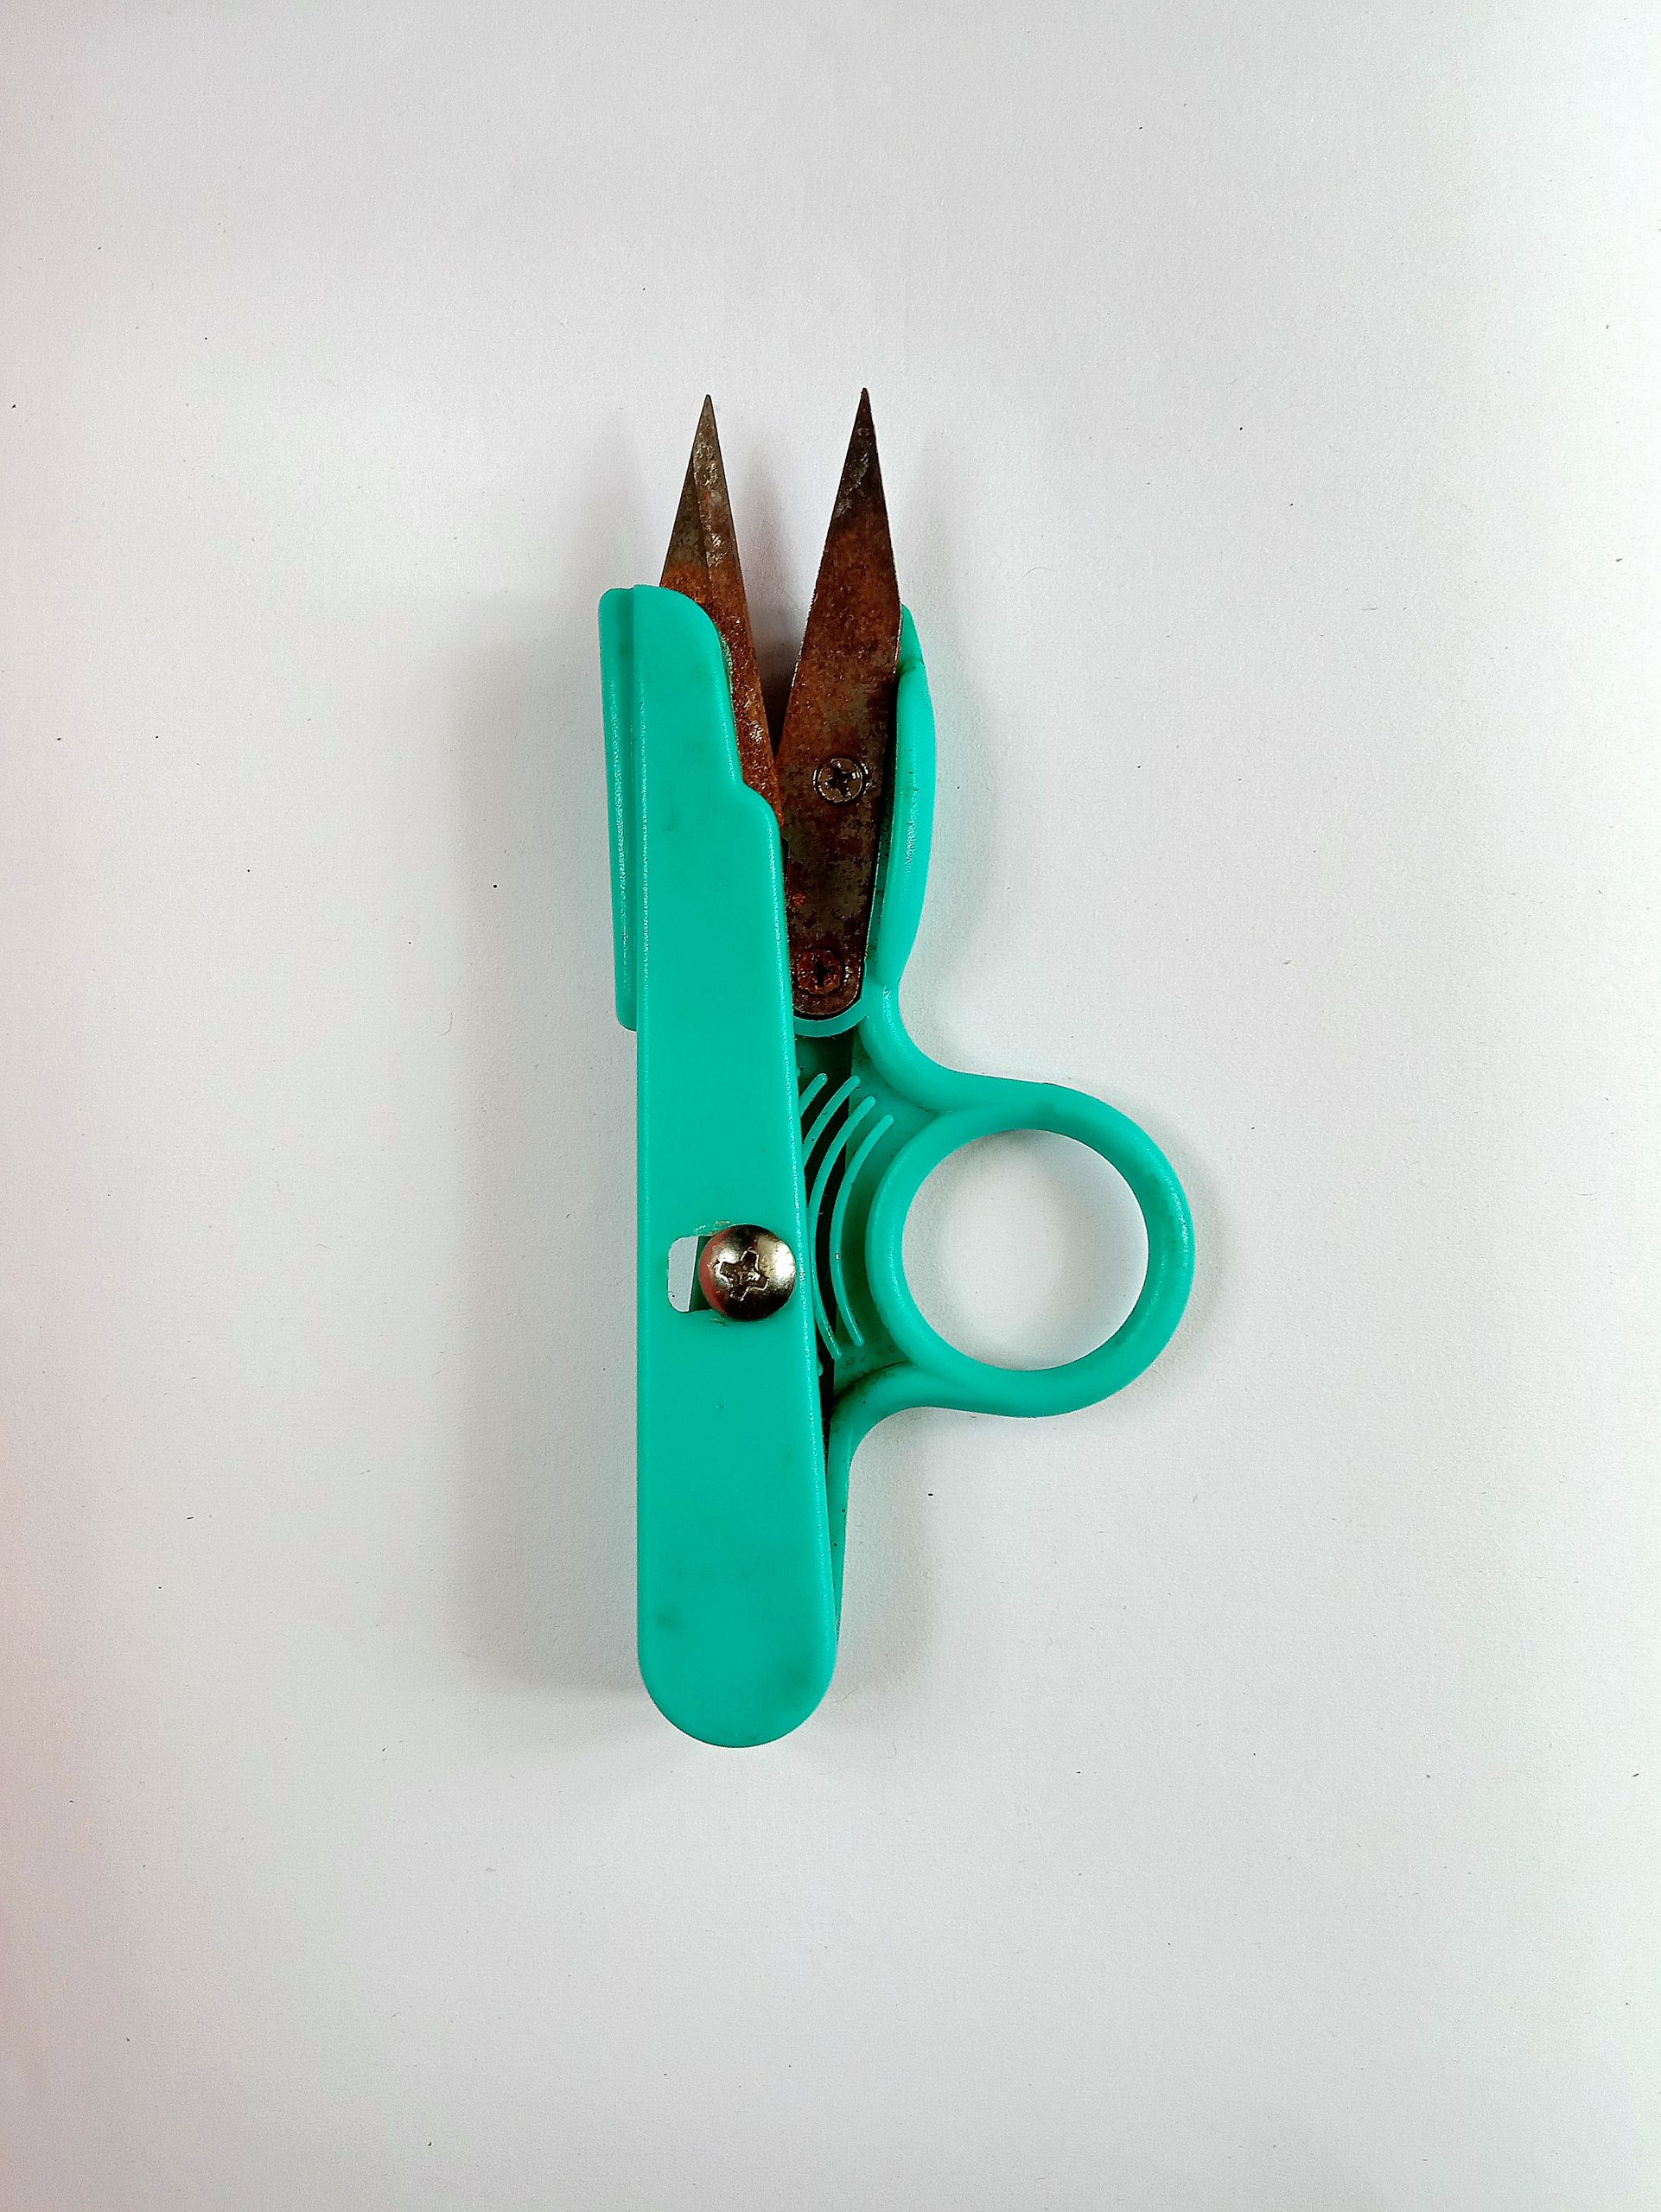 Rusty scissor